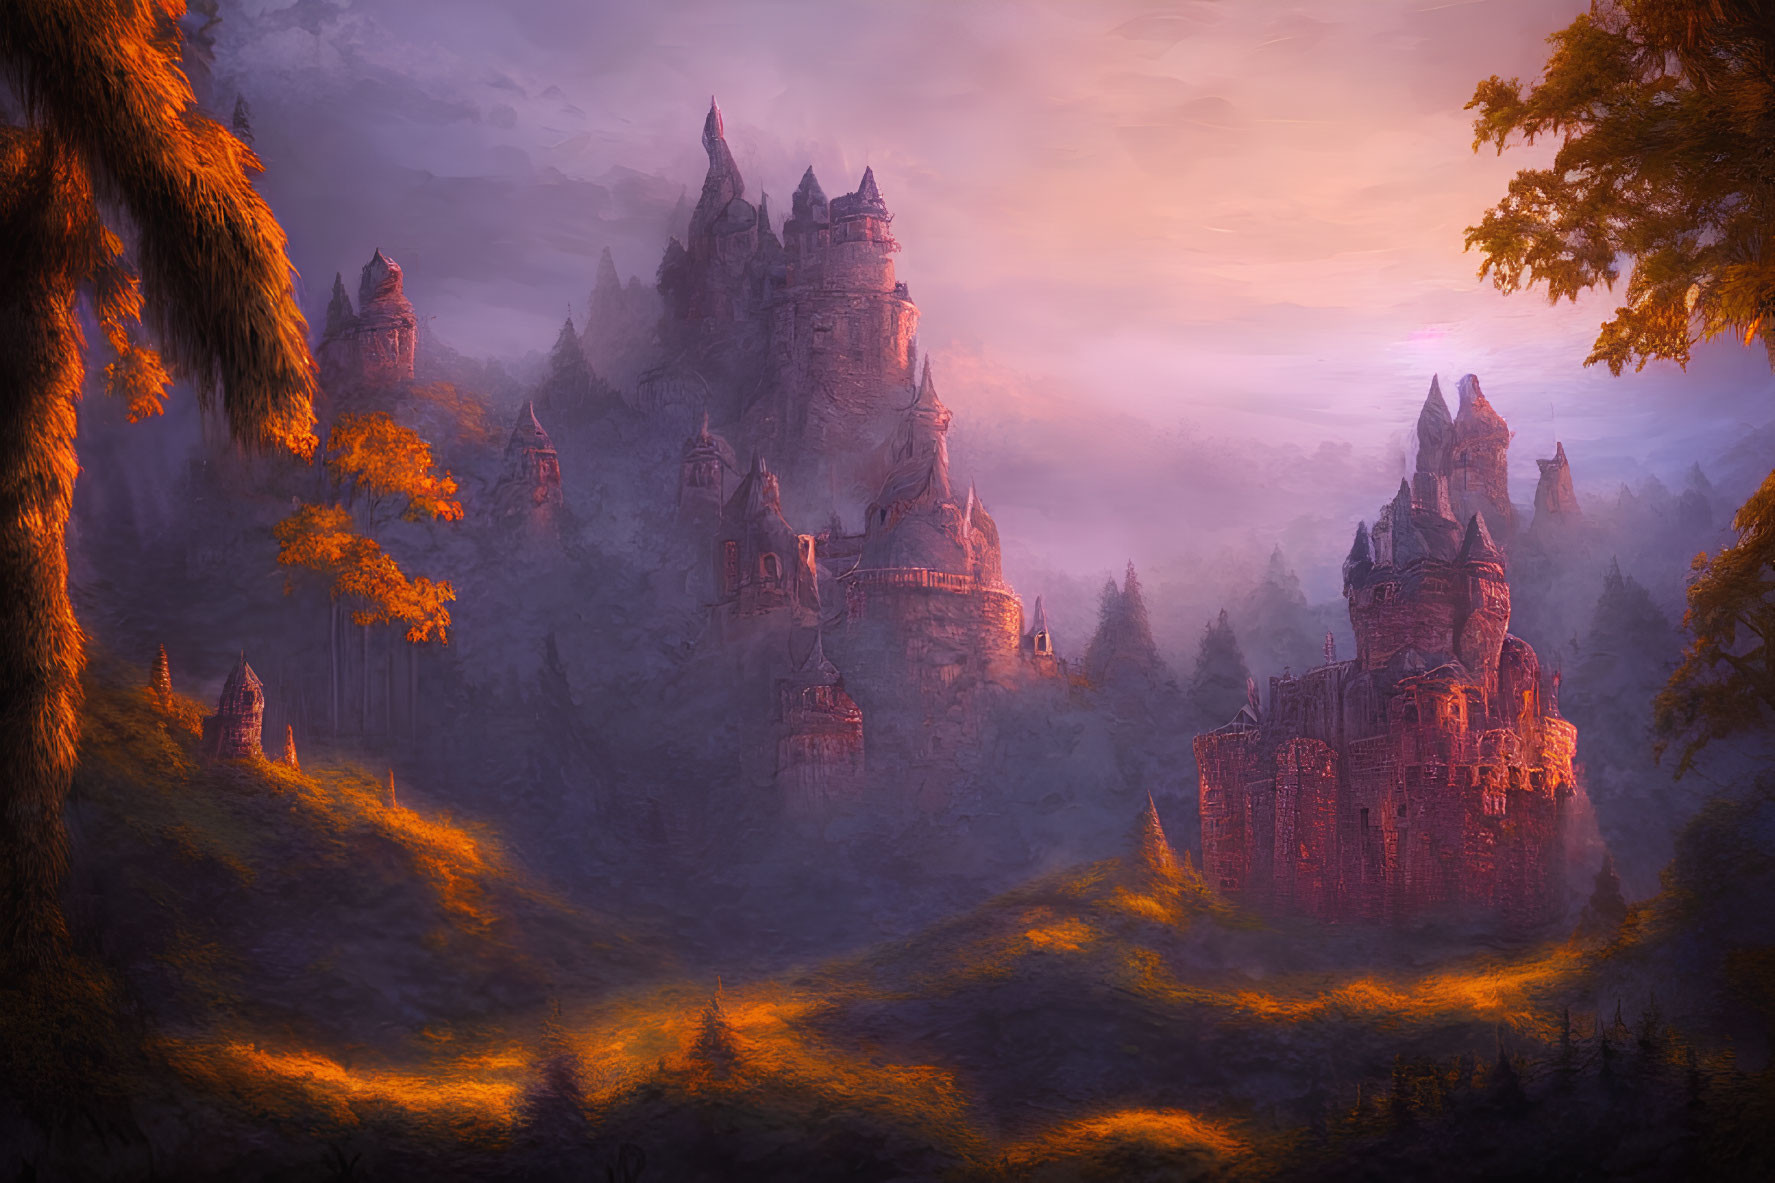 Majestic castle in golden forest under misty glow